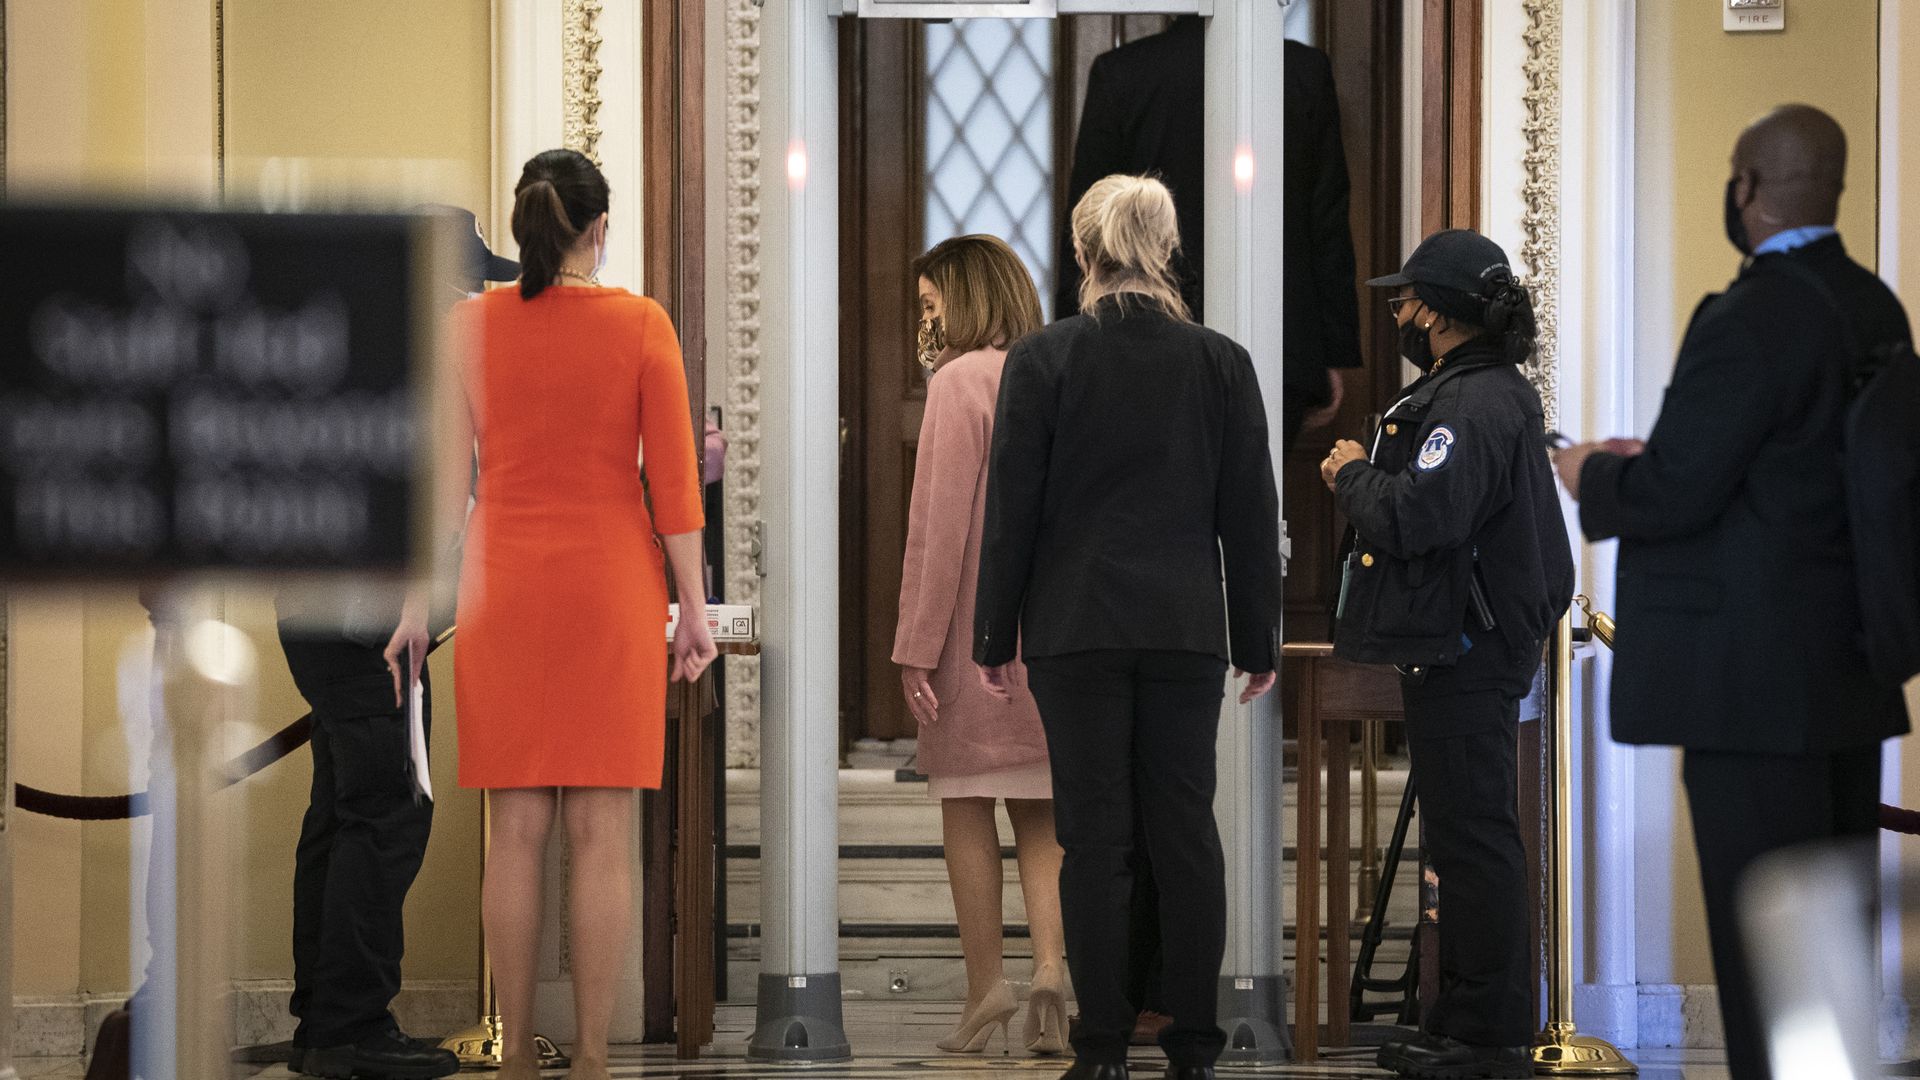 Speaker Nancy Pelosi is seen going through a metal detector before entering the House floor.